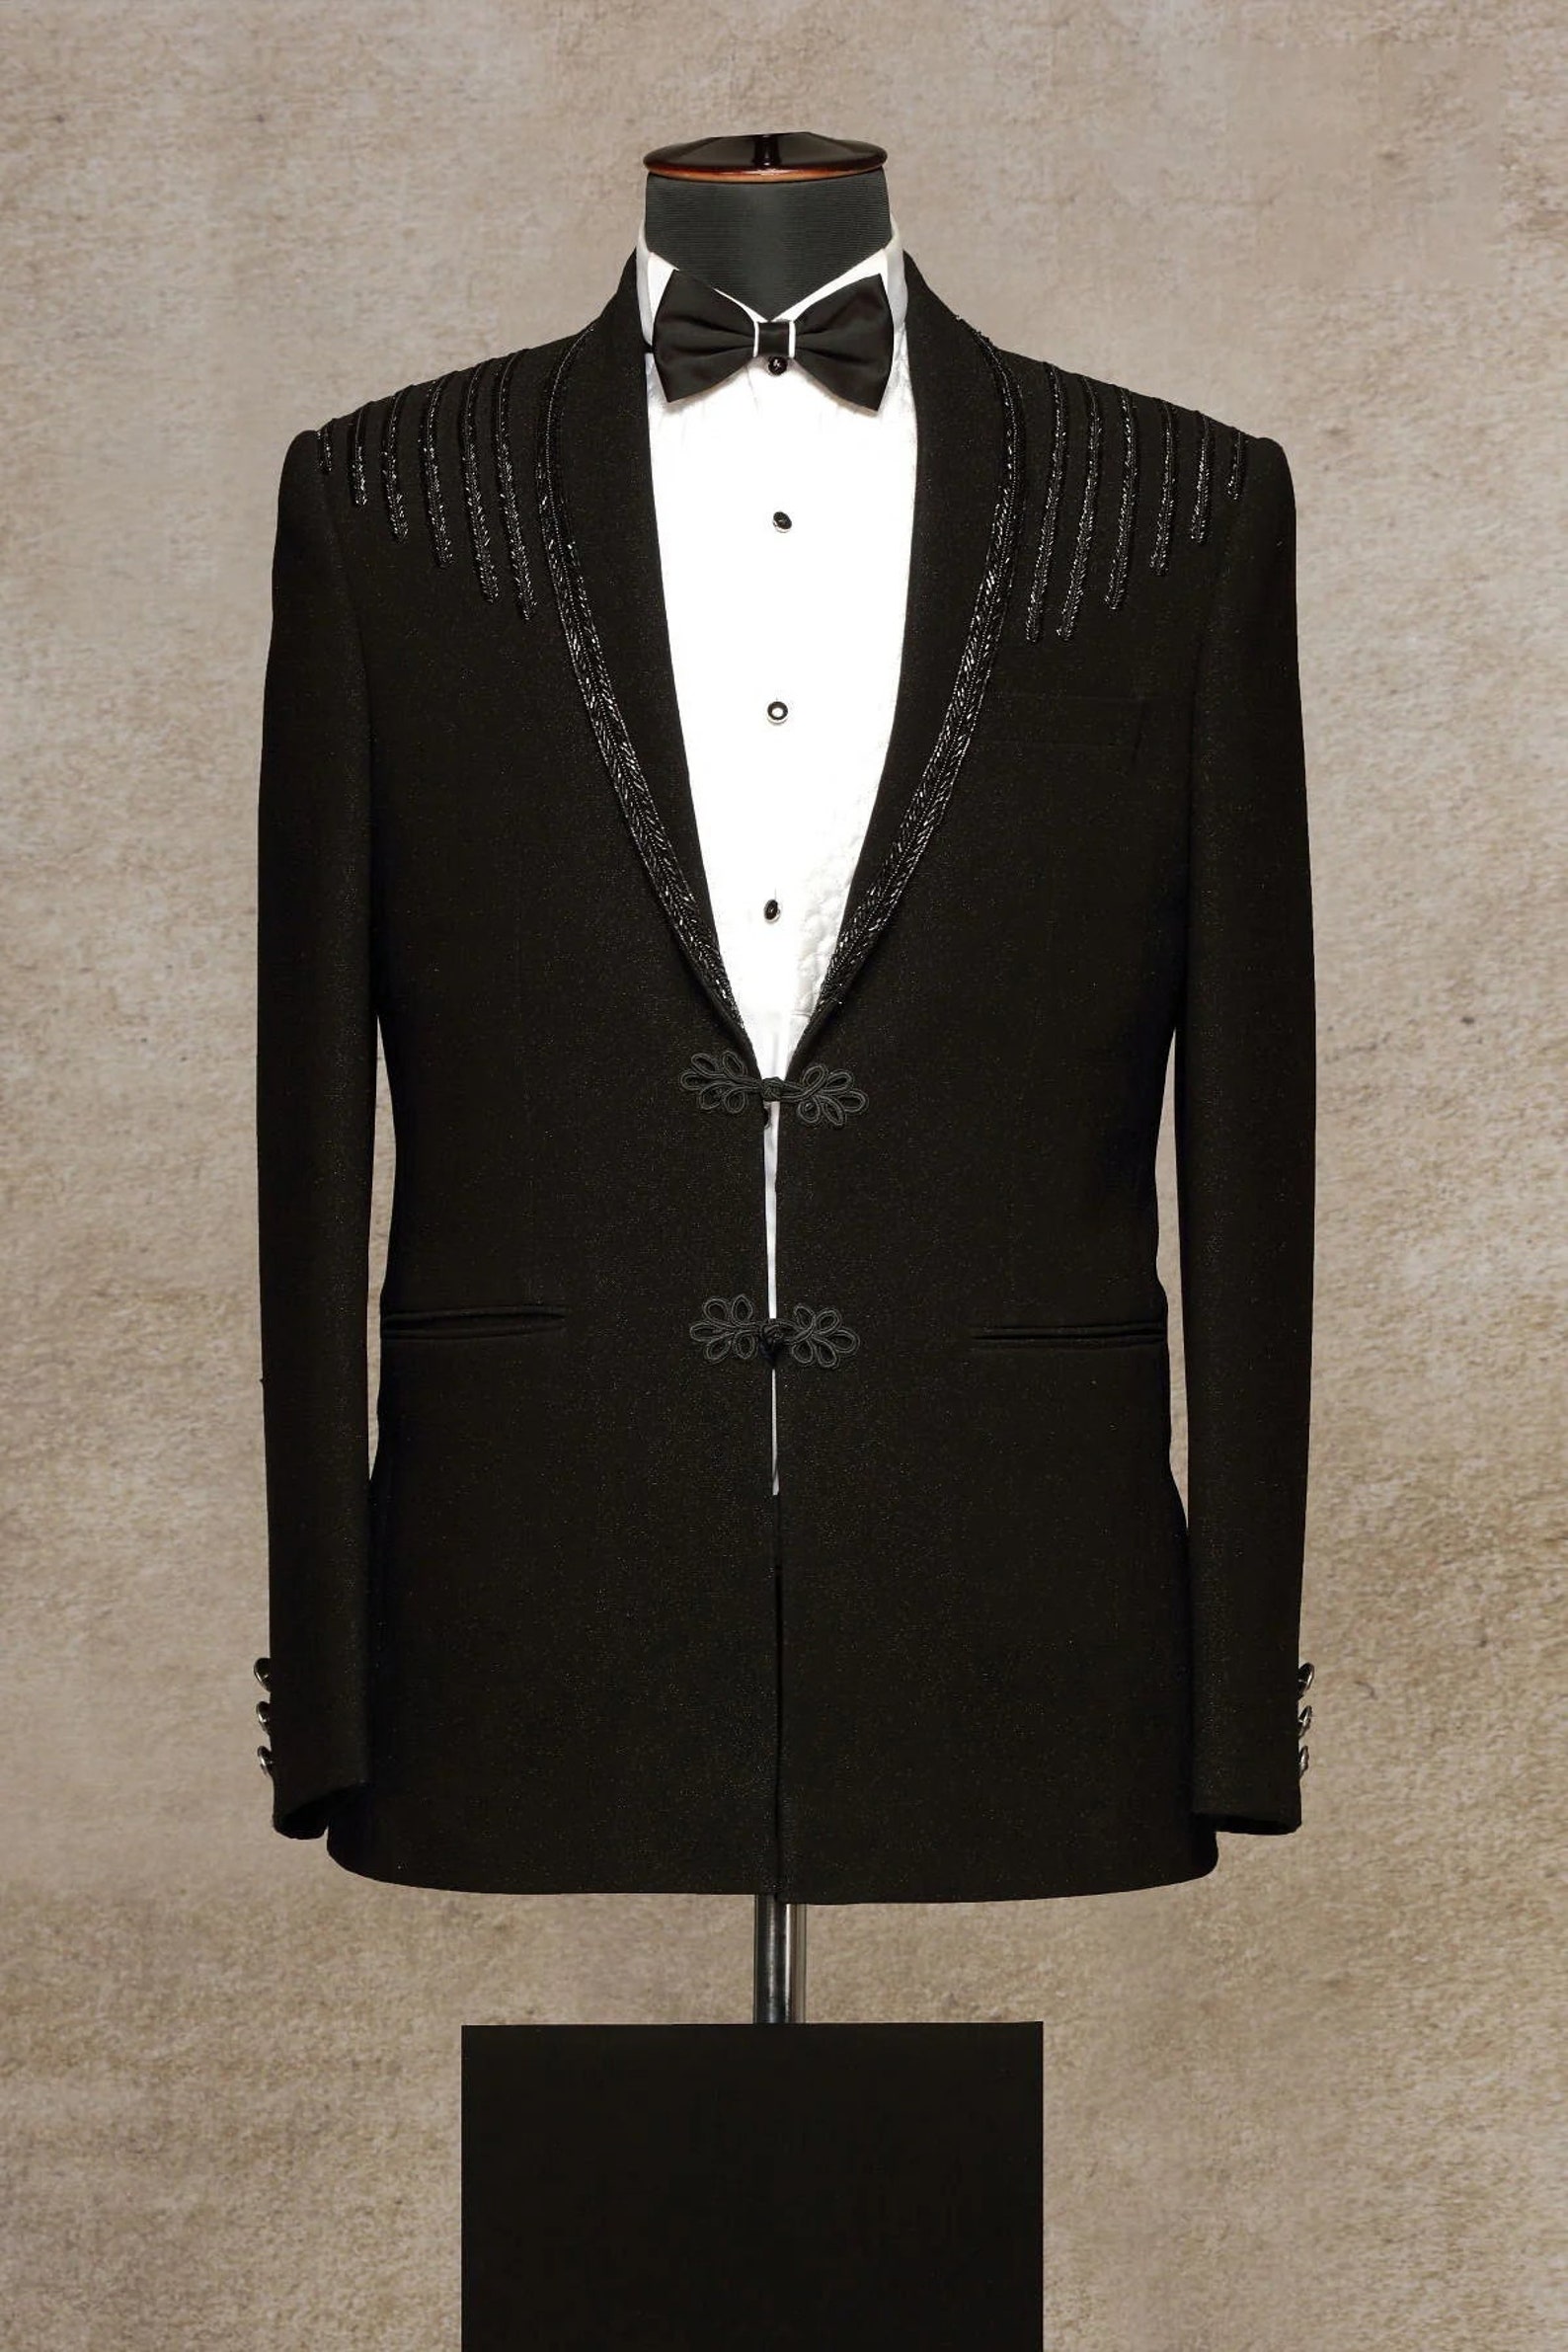 Men Black Cutdana Embroidered Tuxedo Suit Designer Single - Etsy